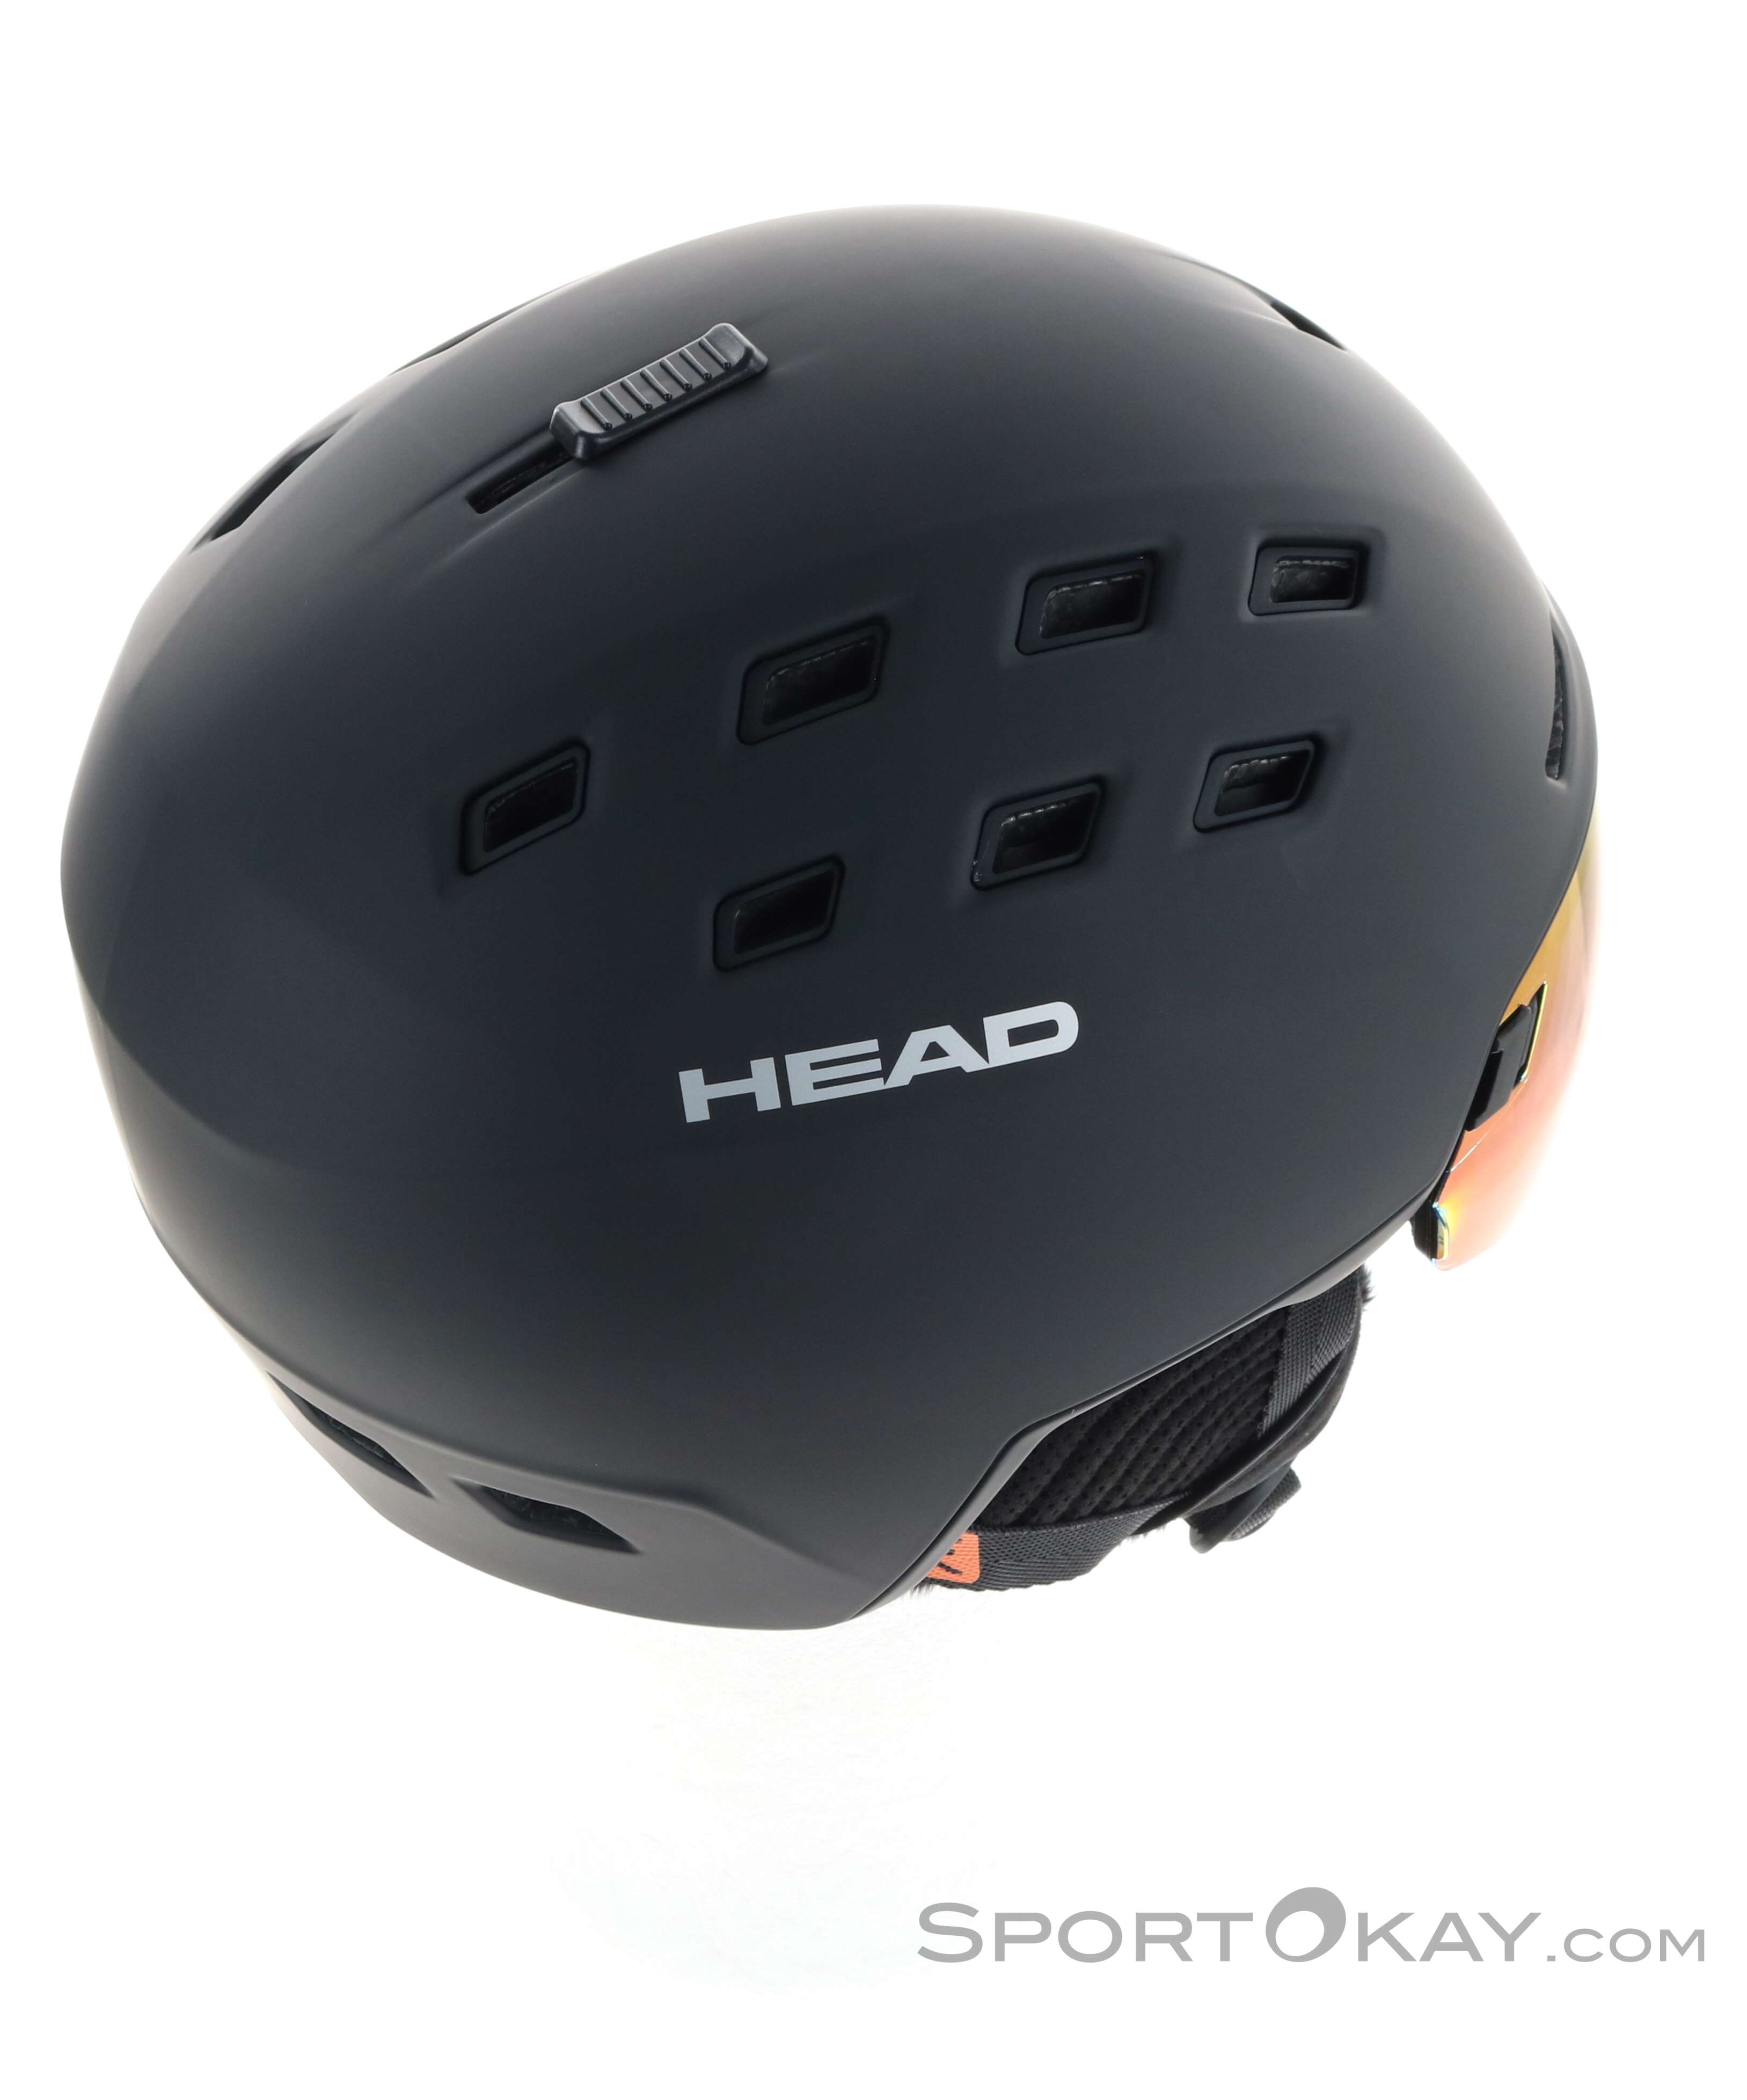 Head 5K Radar Ski/Snowboard Visor Helmet